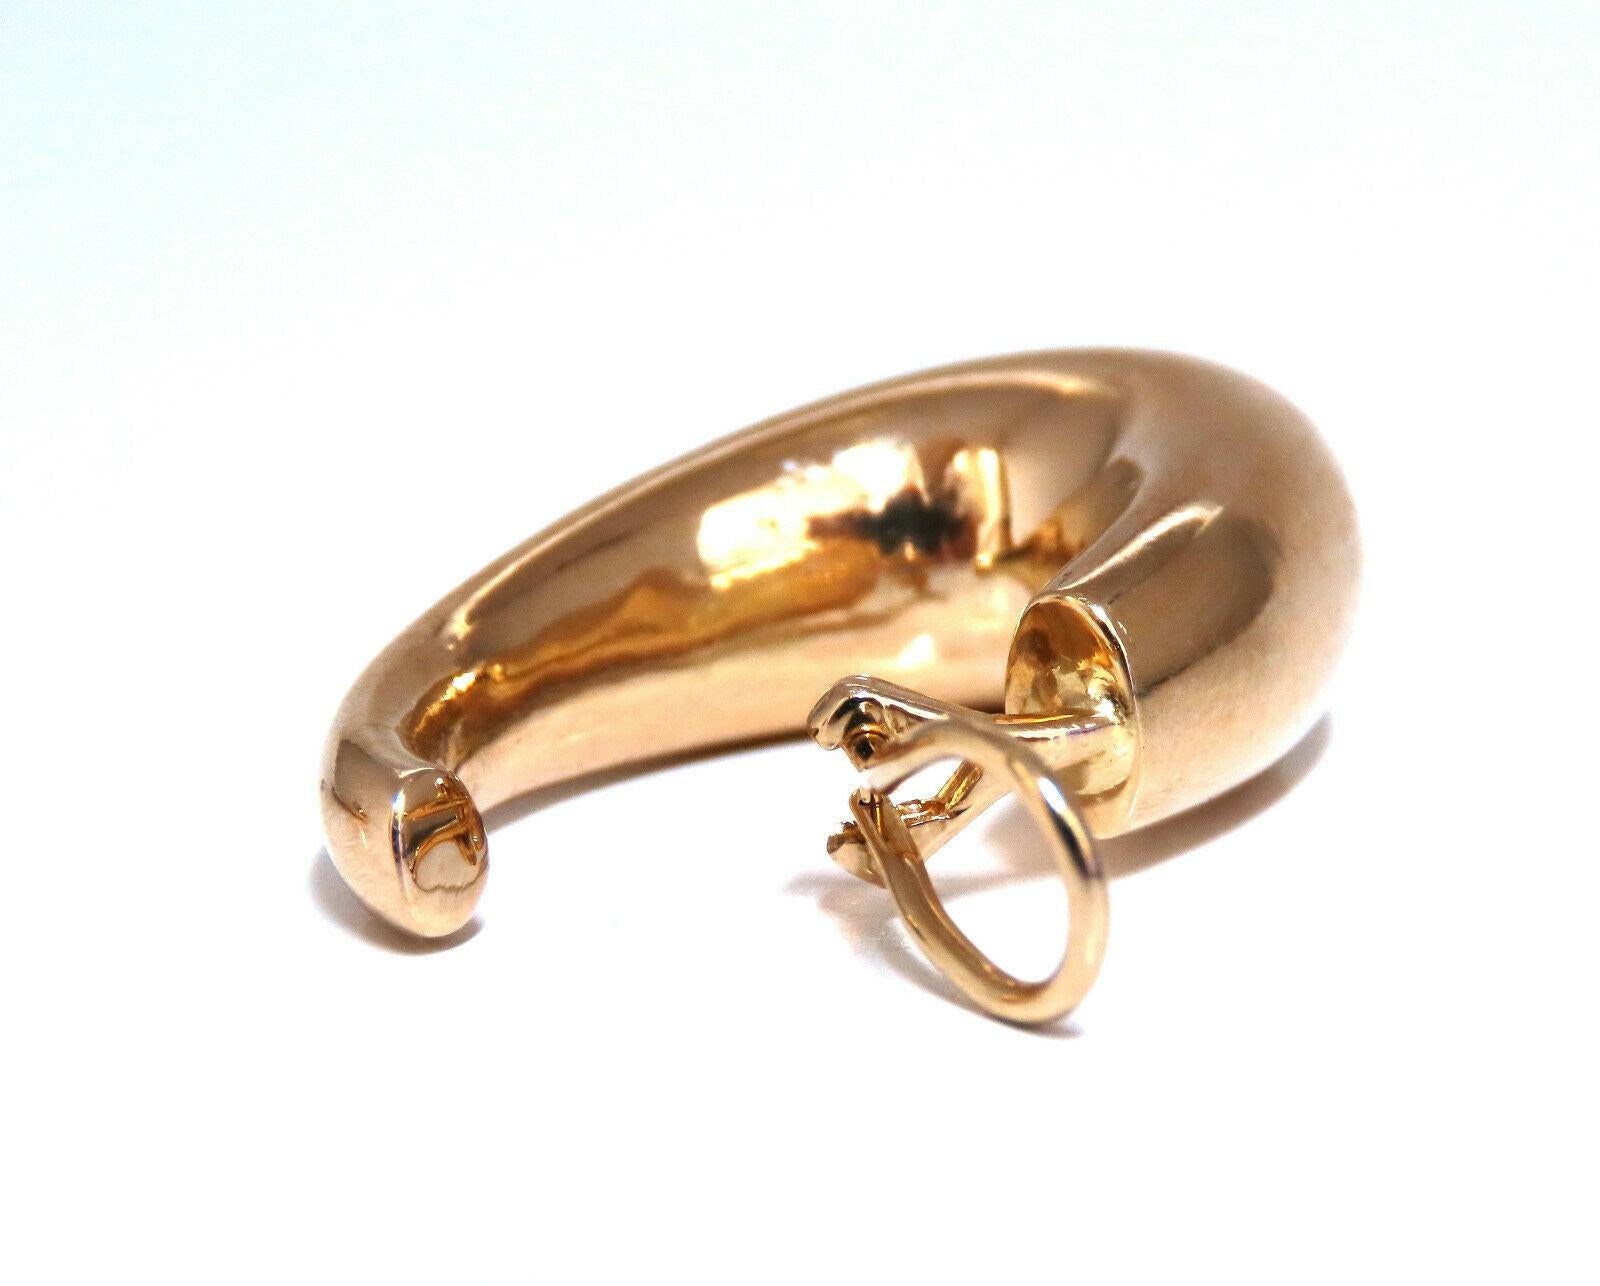 Elongated Tubular Gold Hoop Earrings

Measurements of Earrings:

21mm diameter.

33mm long

10mm wide.

15.8 grams / 14kt. yellow gold

Earrings are gorgeous made